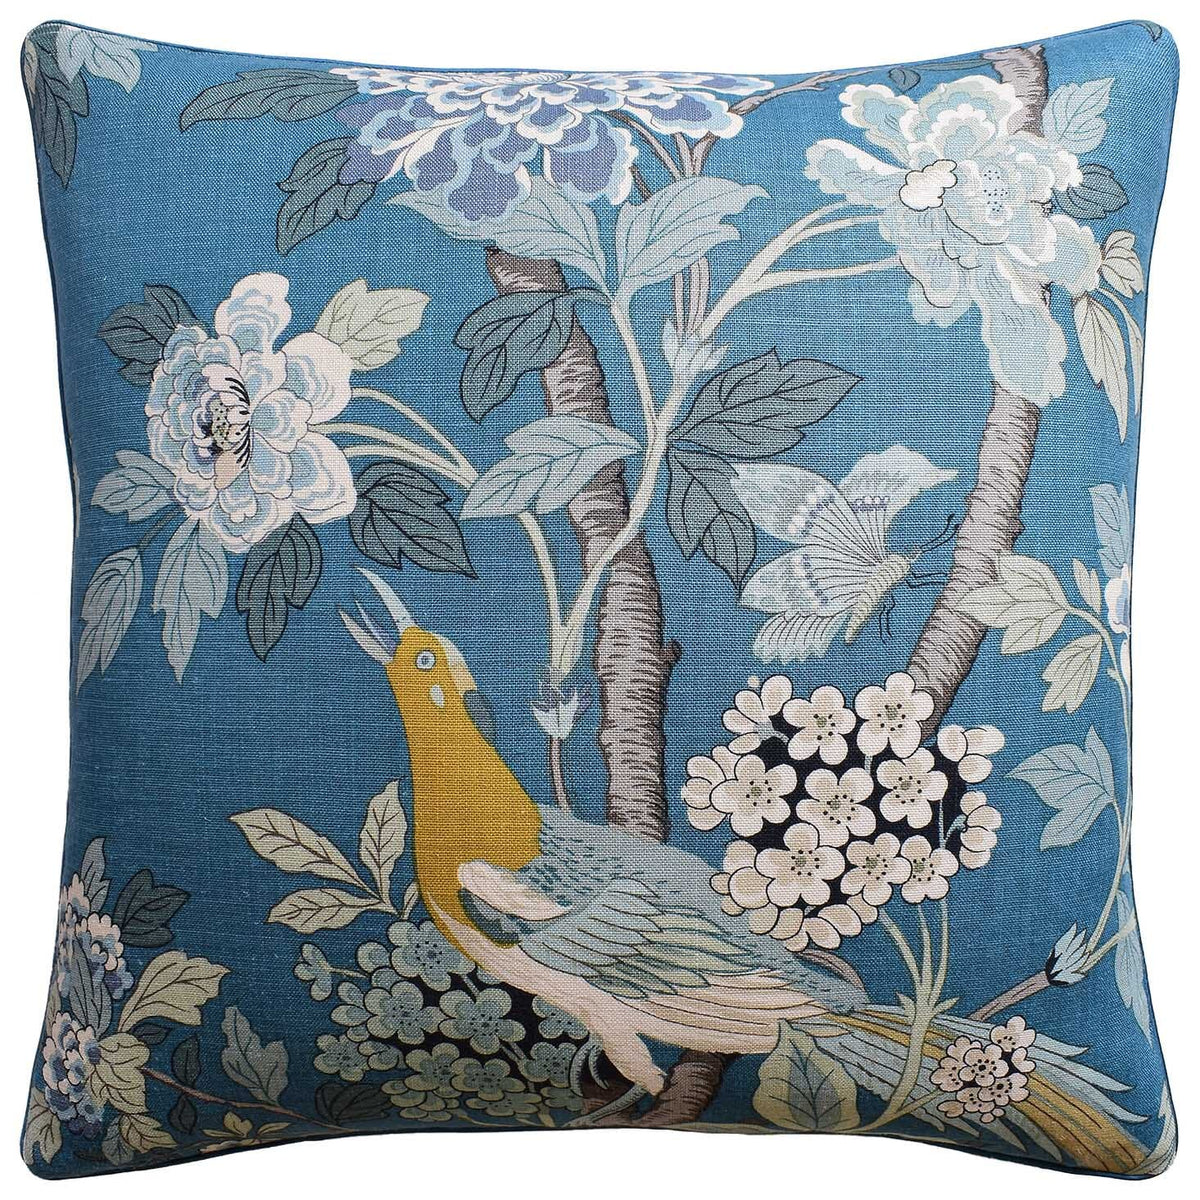 Hydrangea Bird Teal - Throw Pillow by Ryan Studio - GP and J Baker Fabric